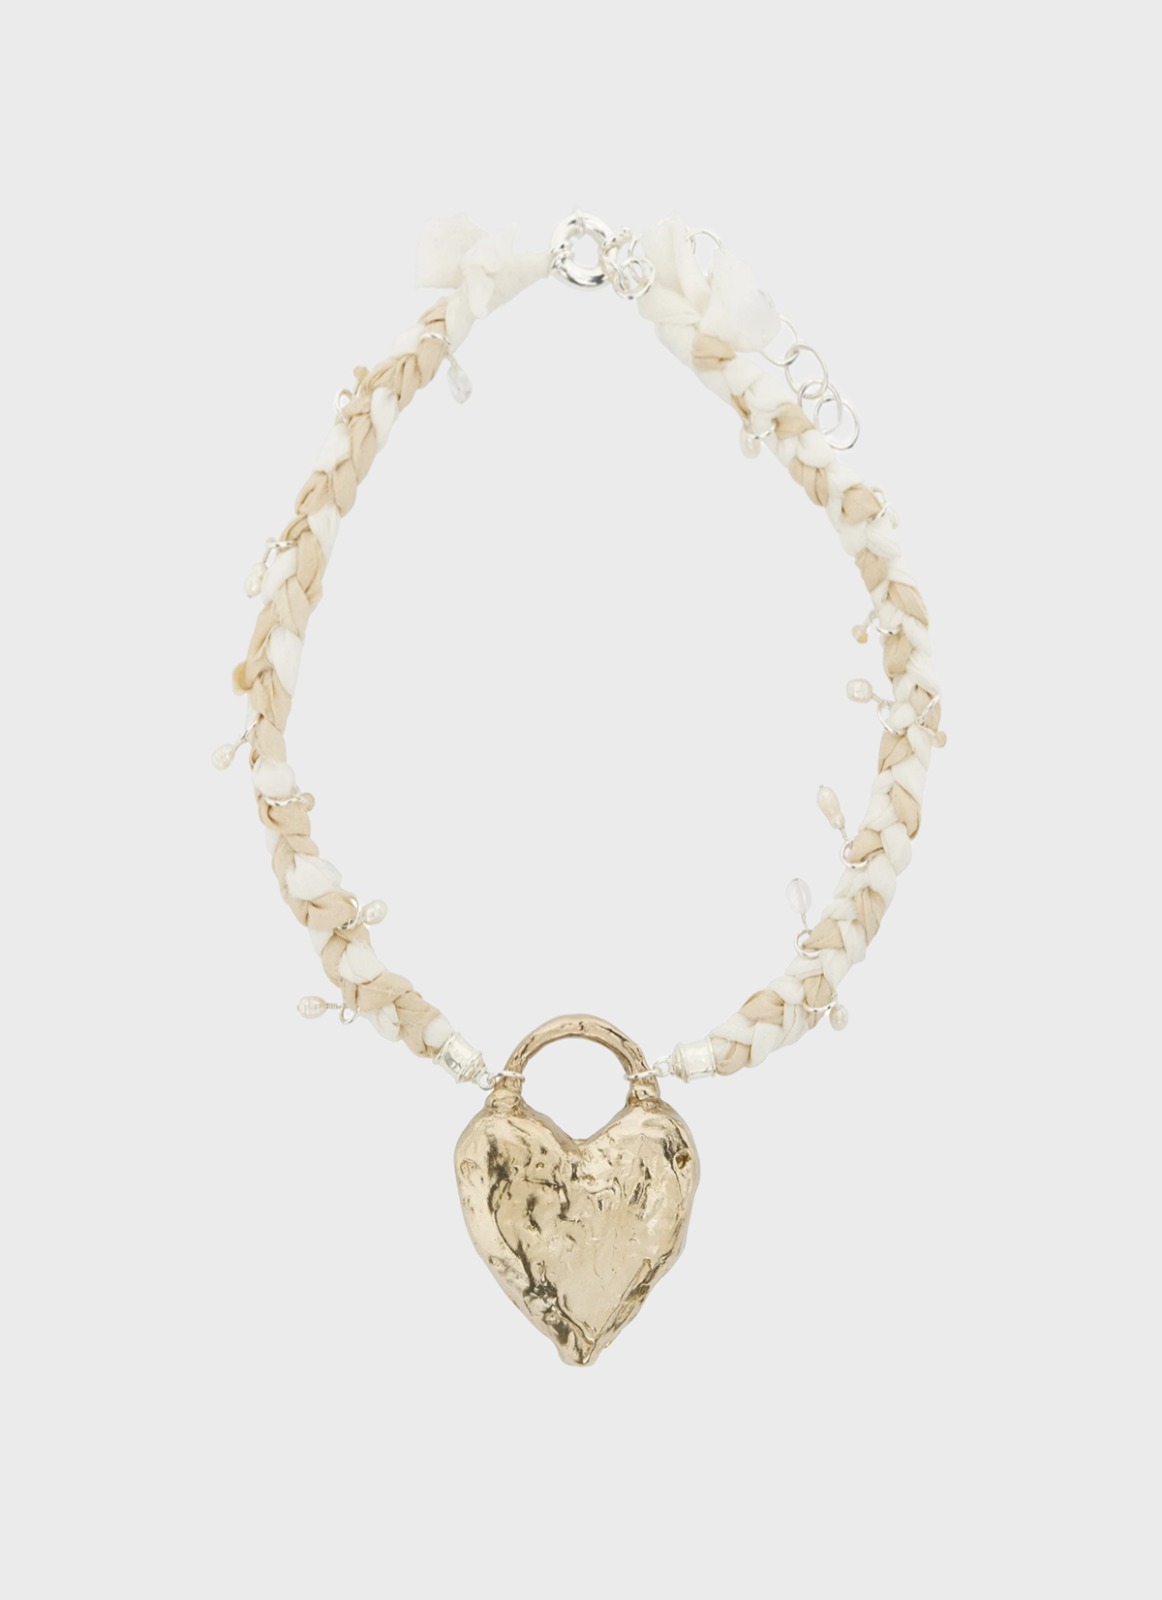 Renli Su X Musée Roo Heart Lock Pendant Necklace